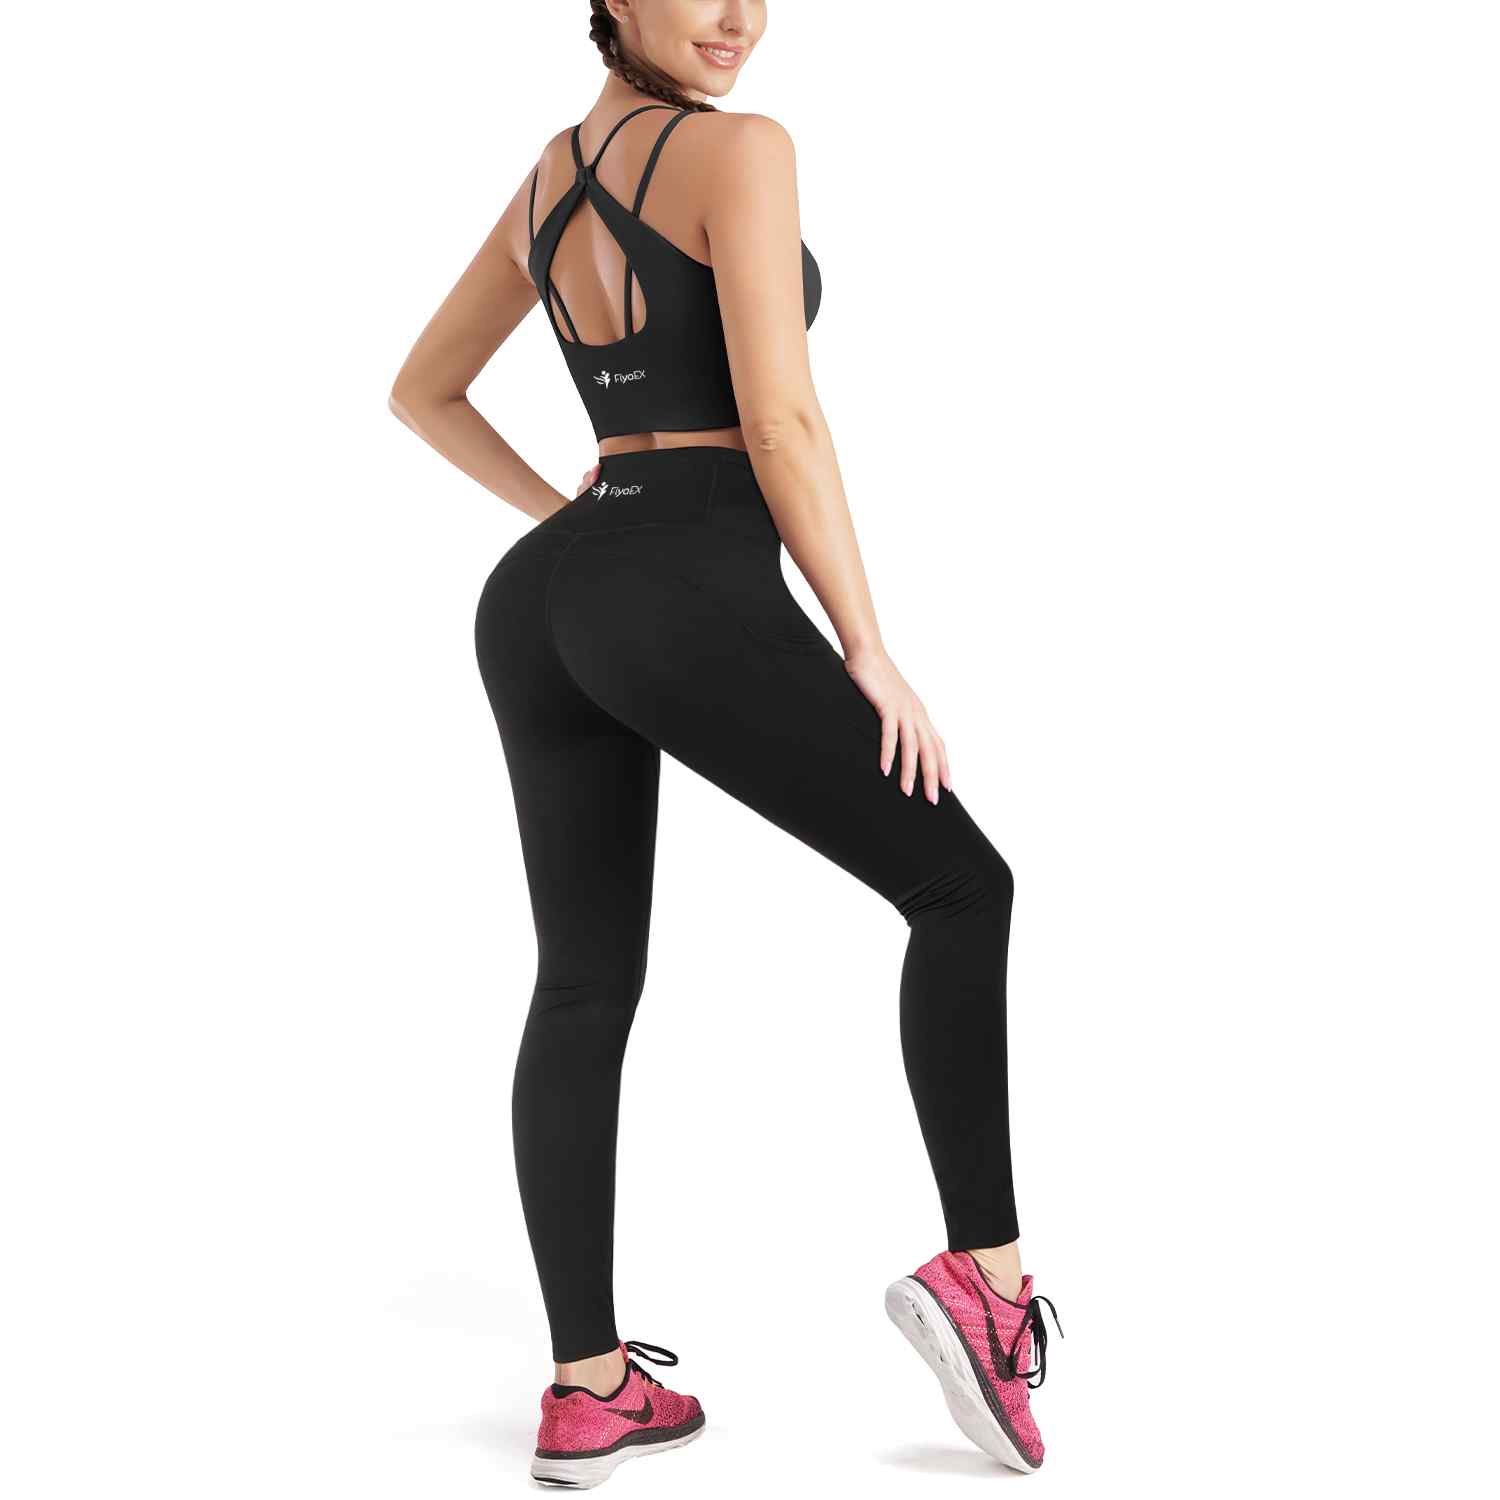 Black Women Sport Yoga Fitness Bottoms Leggings Athletic Pants Top Bra Set